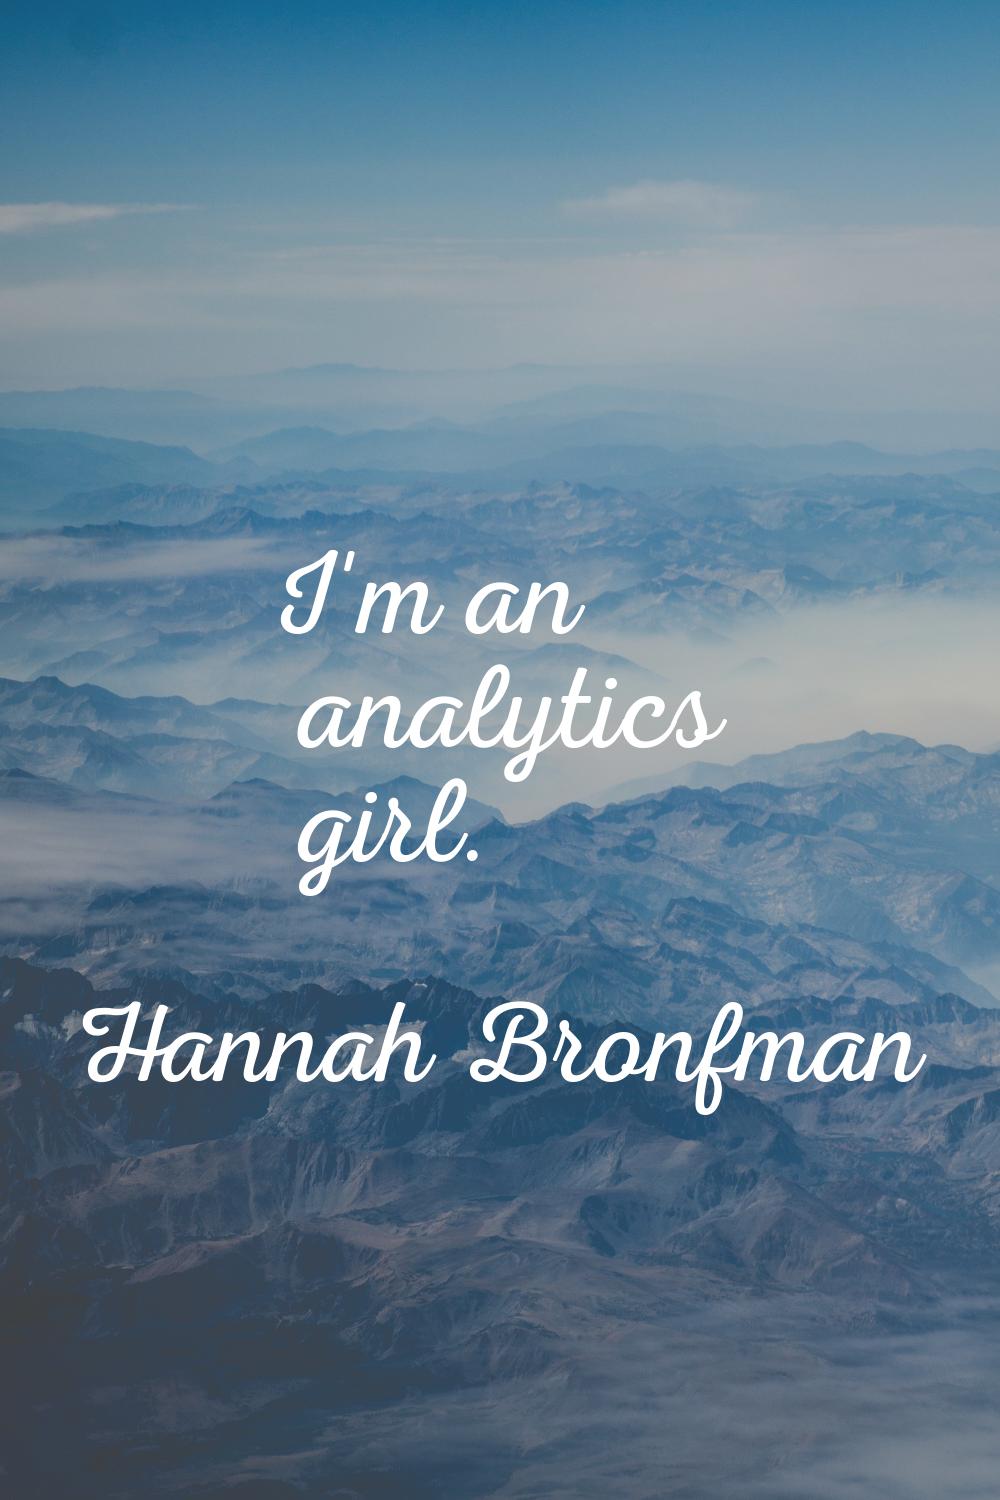 I'm an analytics girl.